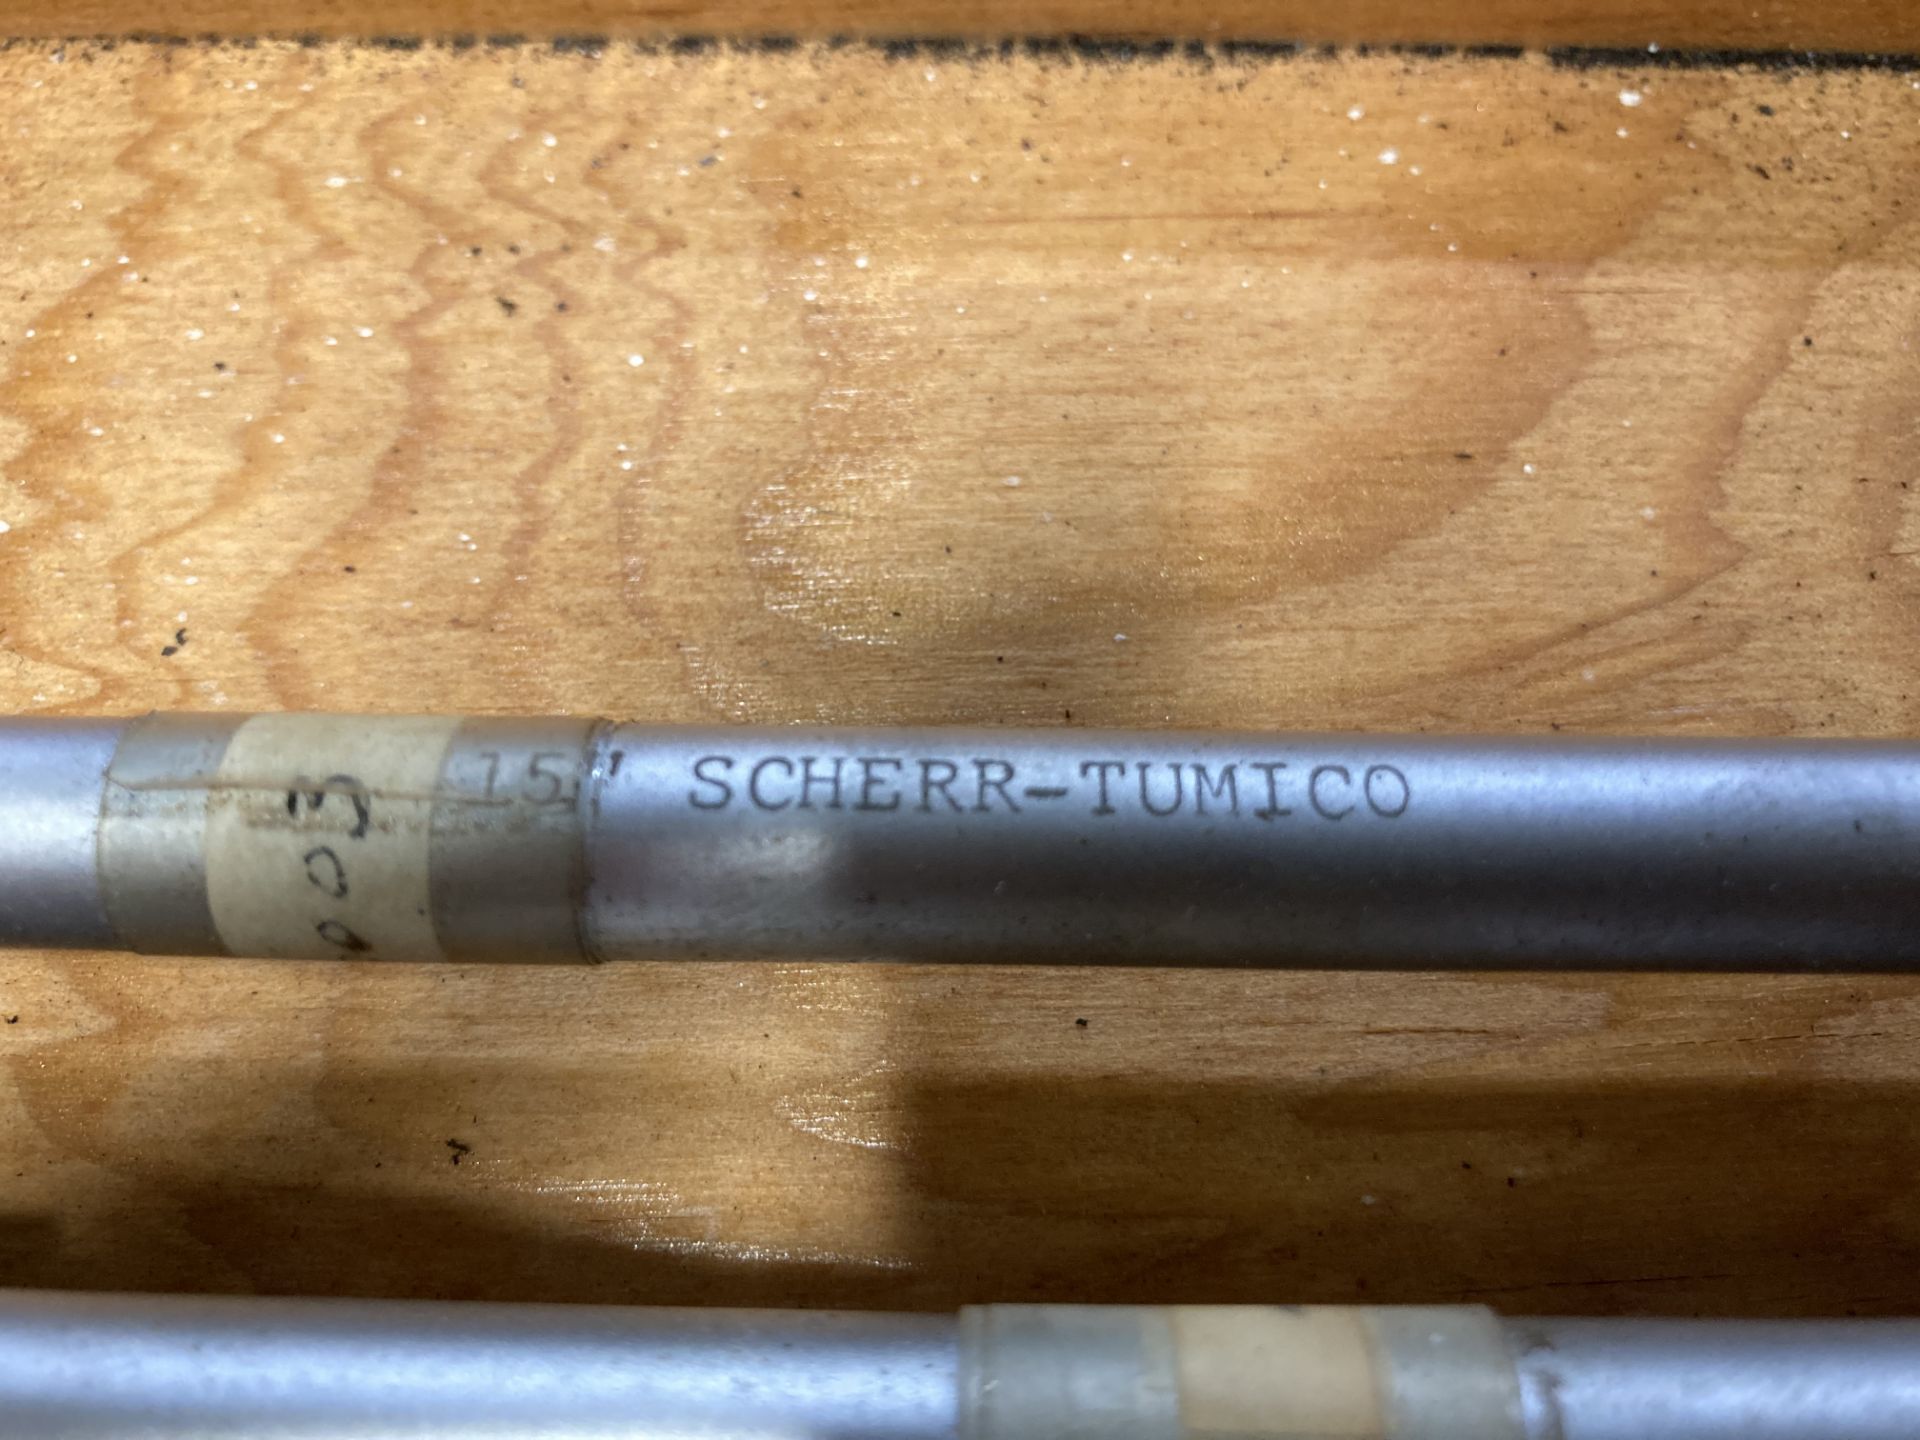 Scherr-Tumico 16" Micrometer Set - Image 6 of 6